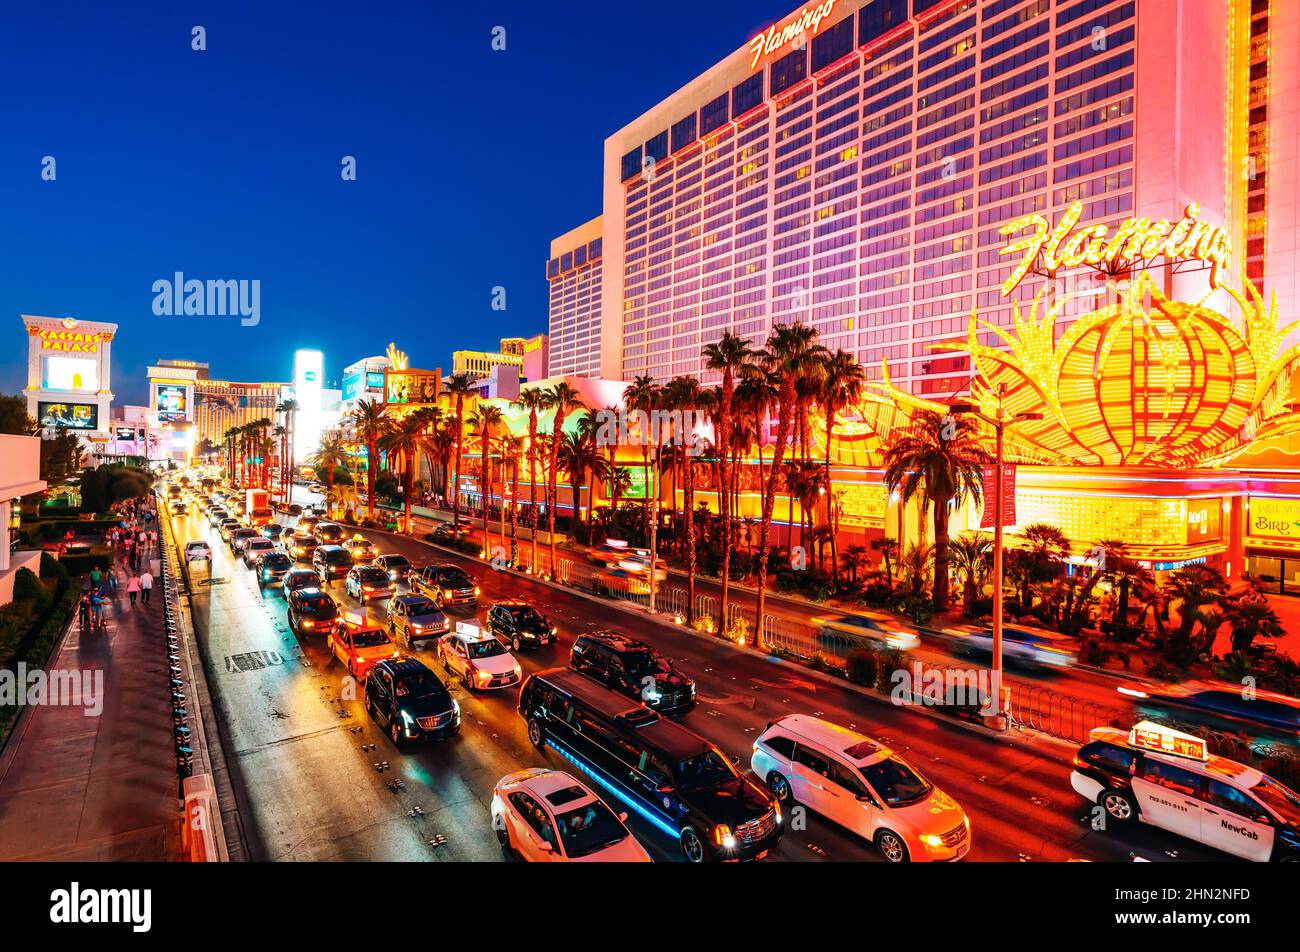 Las Vegas, Nevada, USA - October 1, 2021  Flamingo, luxury Las Vegas Hotel and Casino. Classic Vegas style at the center of the Strip. Street view, tr Stock Photo